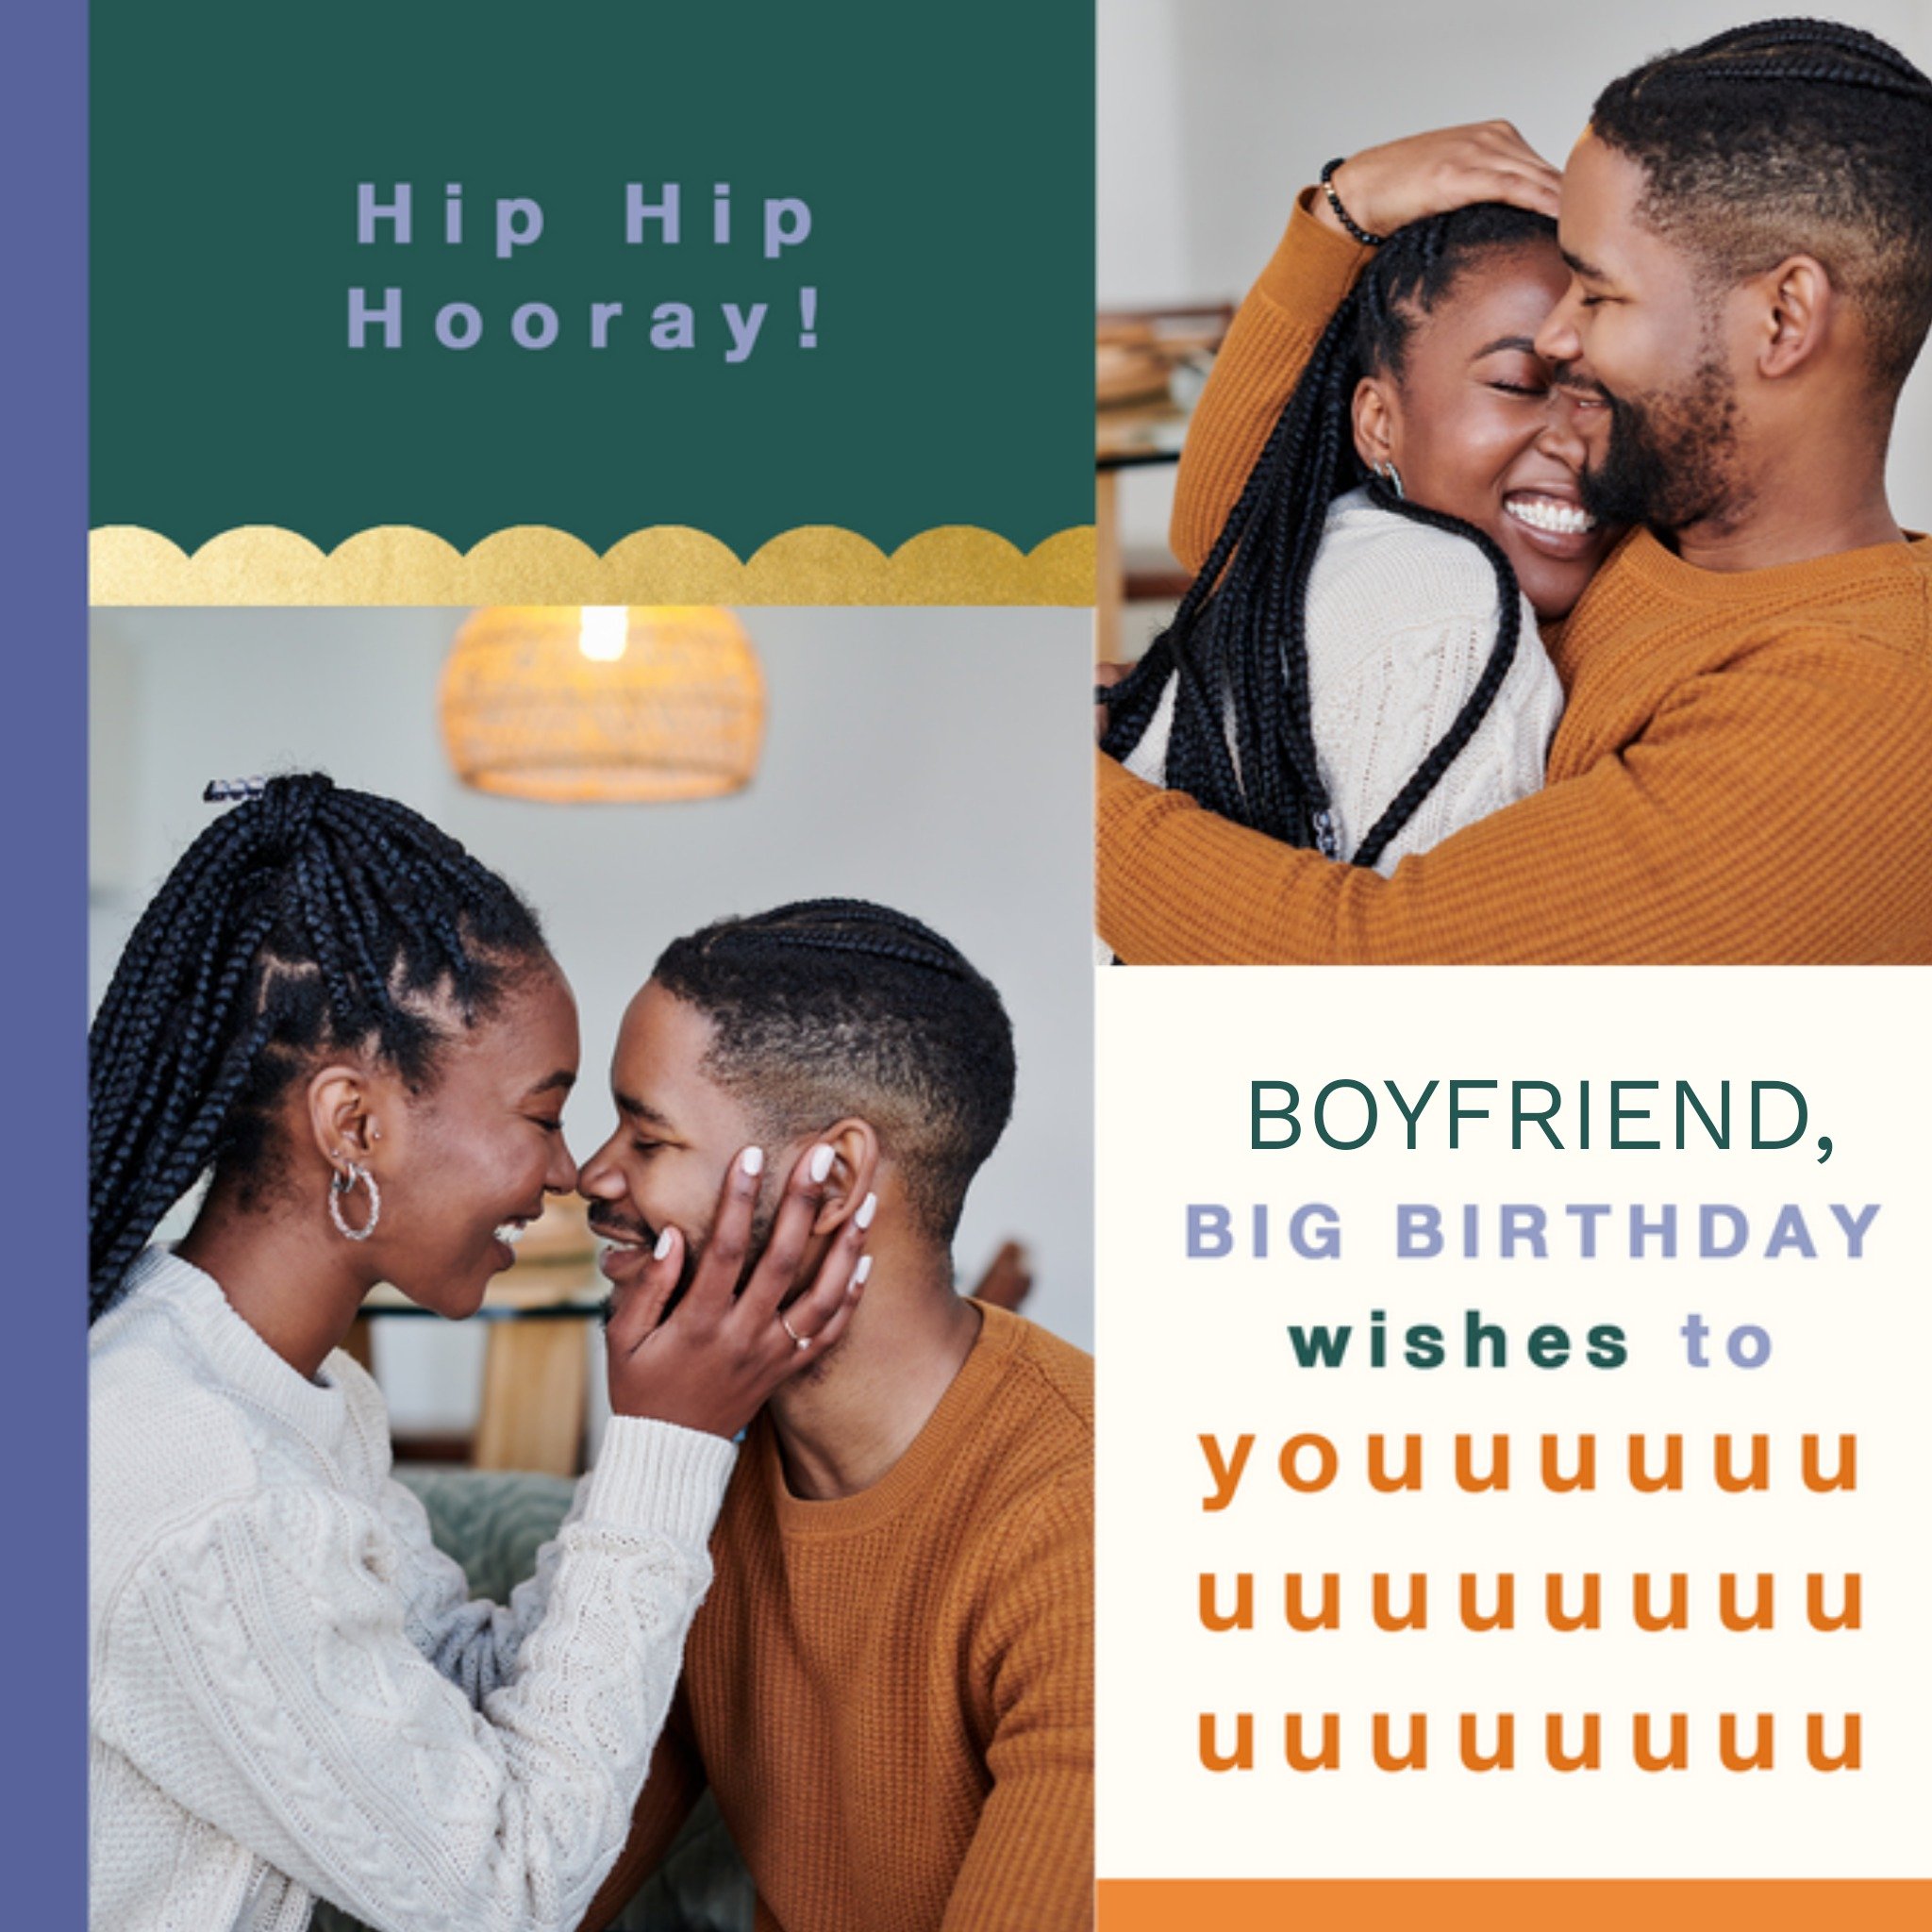 Moonpig Hip Hip Hooray Boyfriend Multi Coloured Blocky Photo Upload Birthday Card, Square